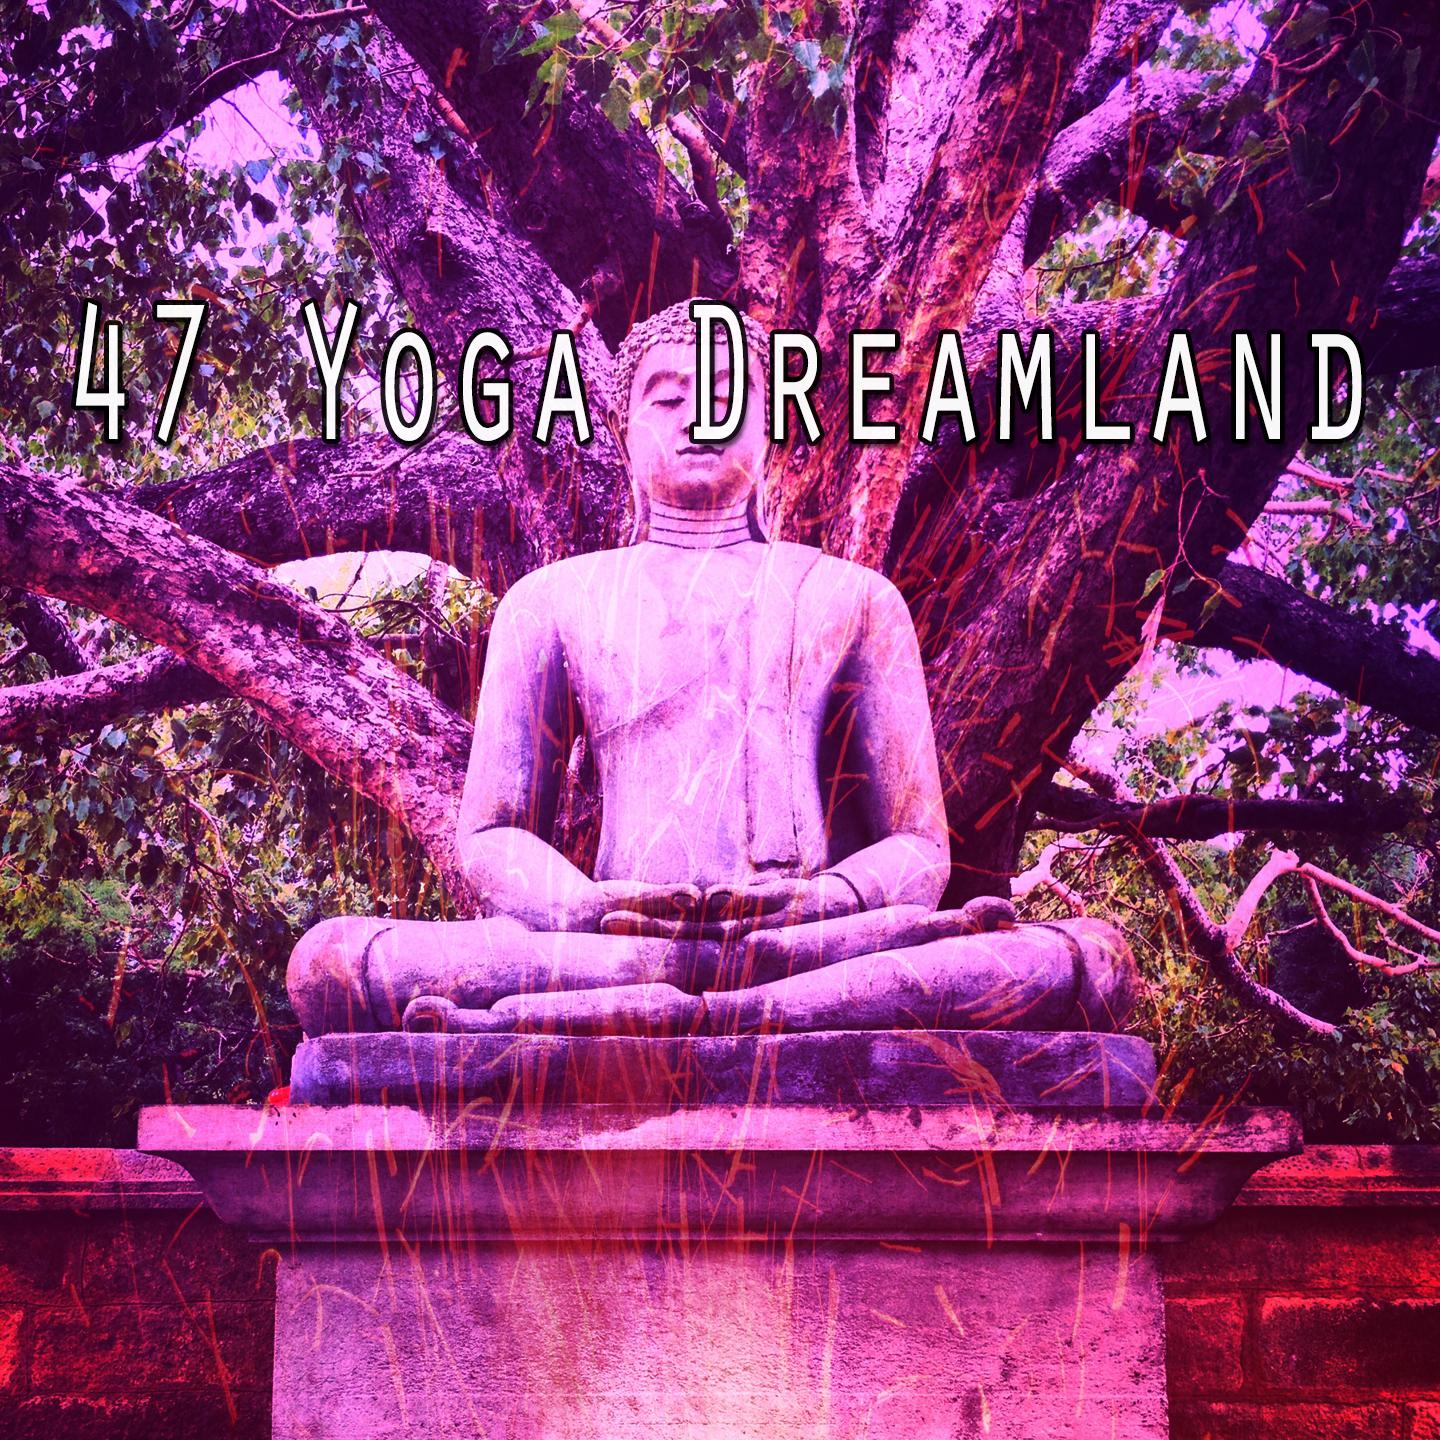 47 Yoga Dreamland